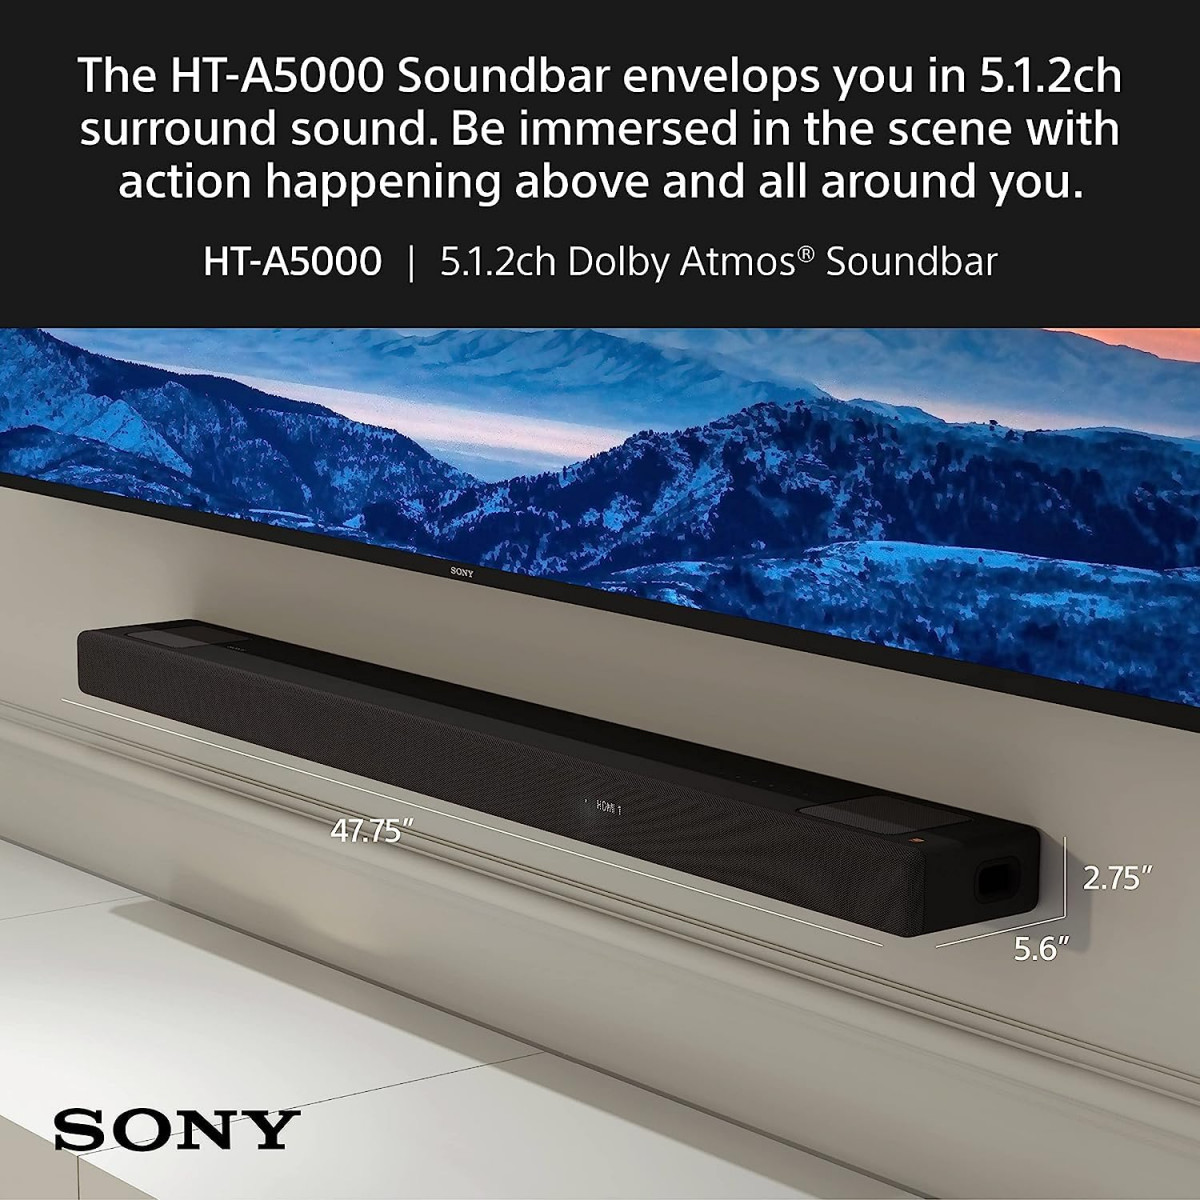 Sony HT-A5000 A Series Premium Soundbar 512Ch 8K4K 360 Spatial Sound Mapping Soundbar For Surround Sound Home Theatre System With Dolby AtmosHi Res360RABTHDMI eArcOpticalAlexaSpotifyBlack